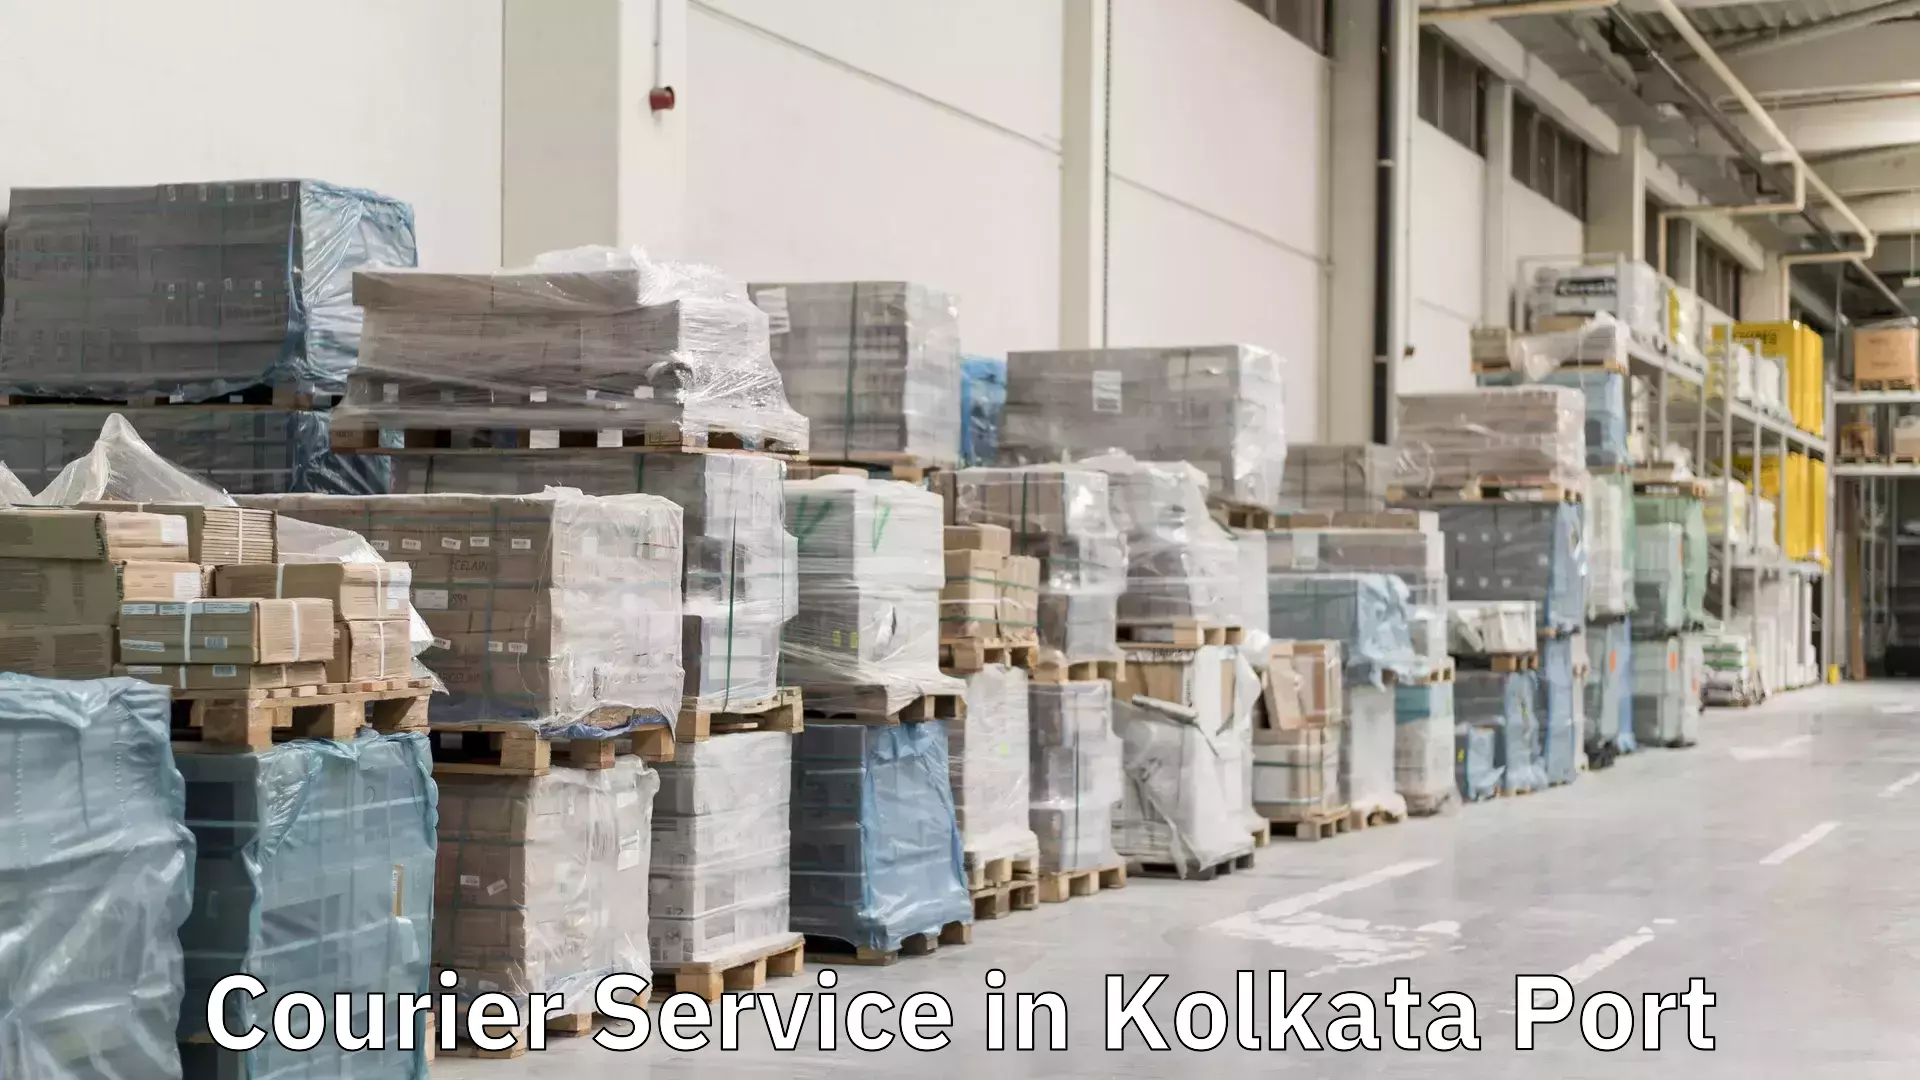 Comprehensive logistics in Kolkata Port